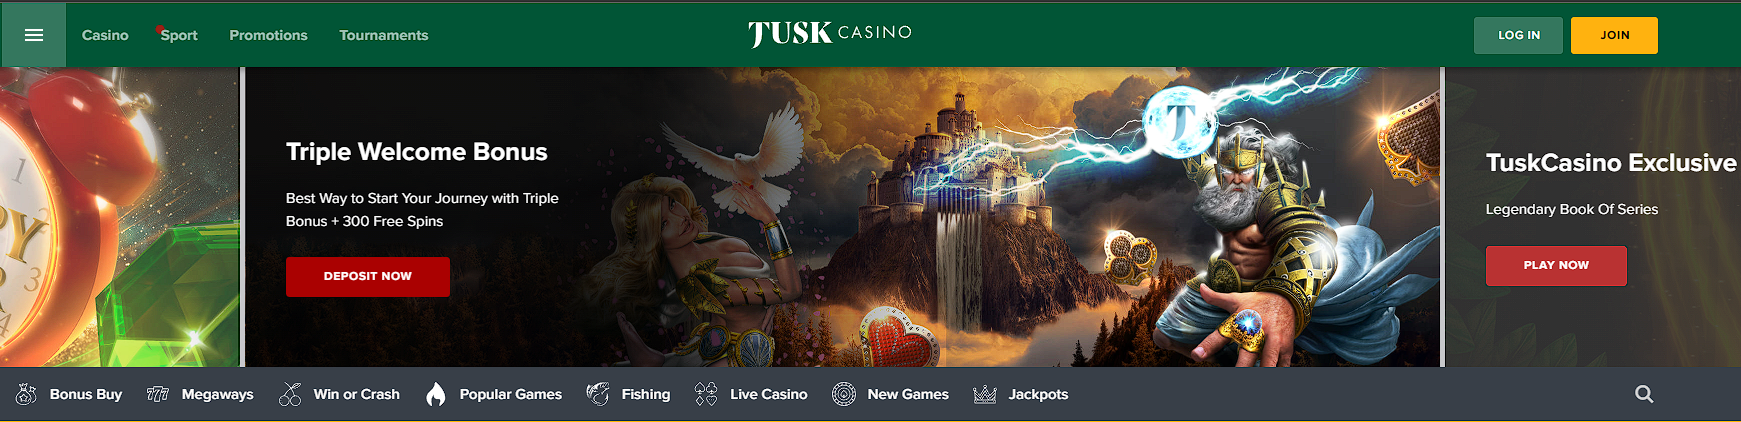 Tusk Casino Review with No Deposit Bonus